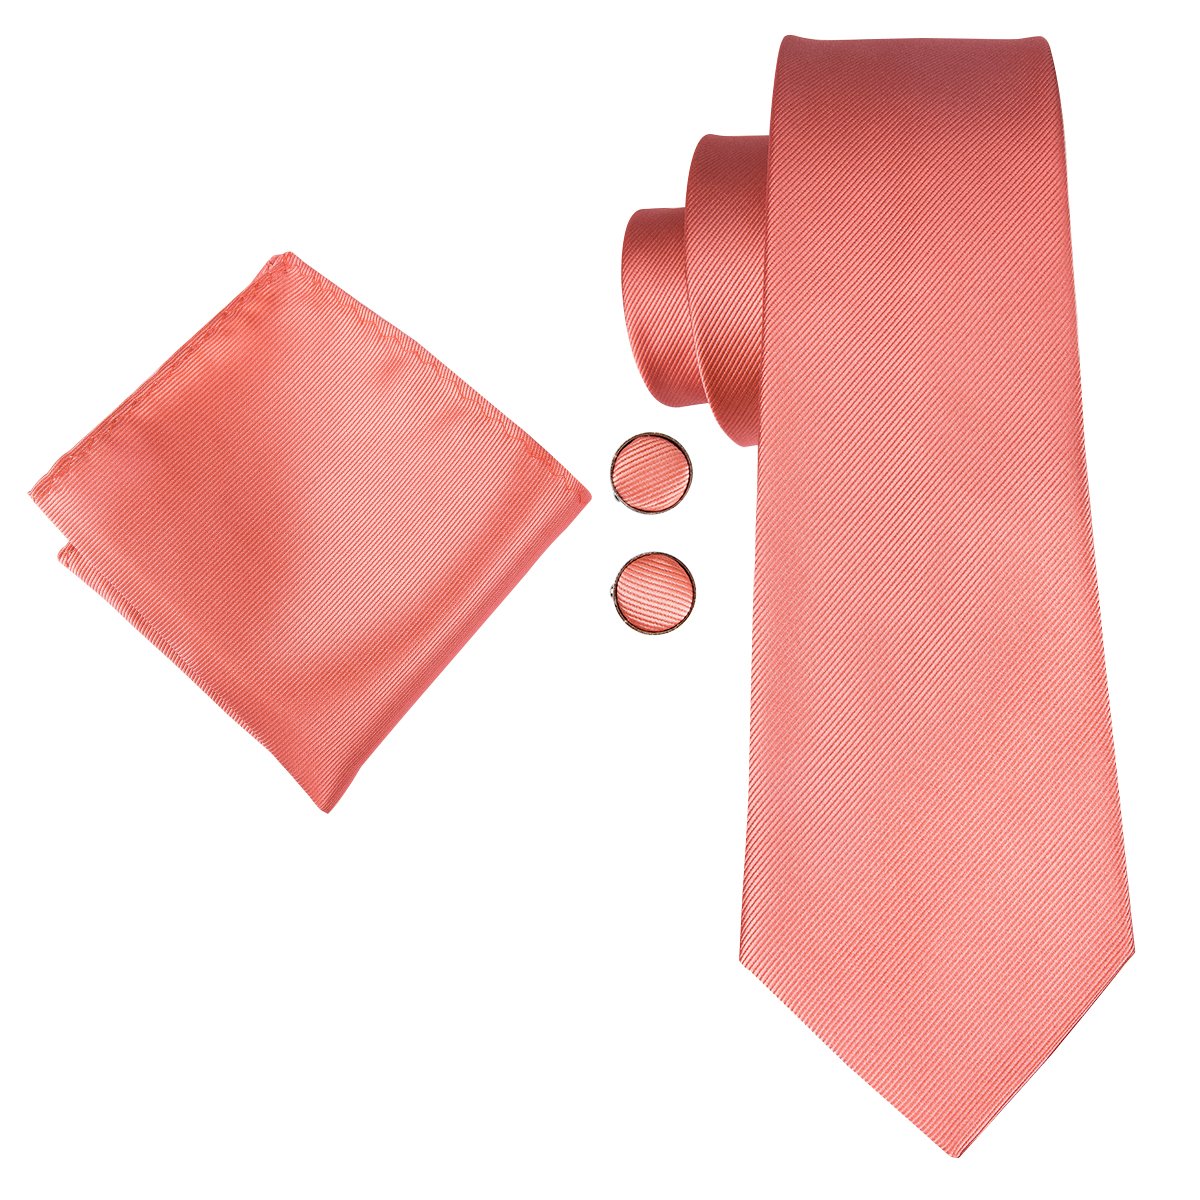 Coral solid Tie Handkerchief Cufflinks Set with Brooch